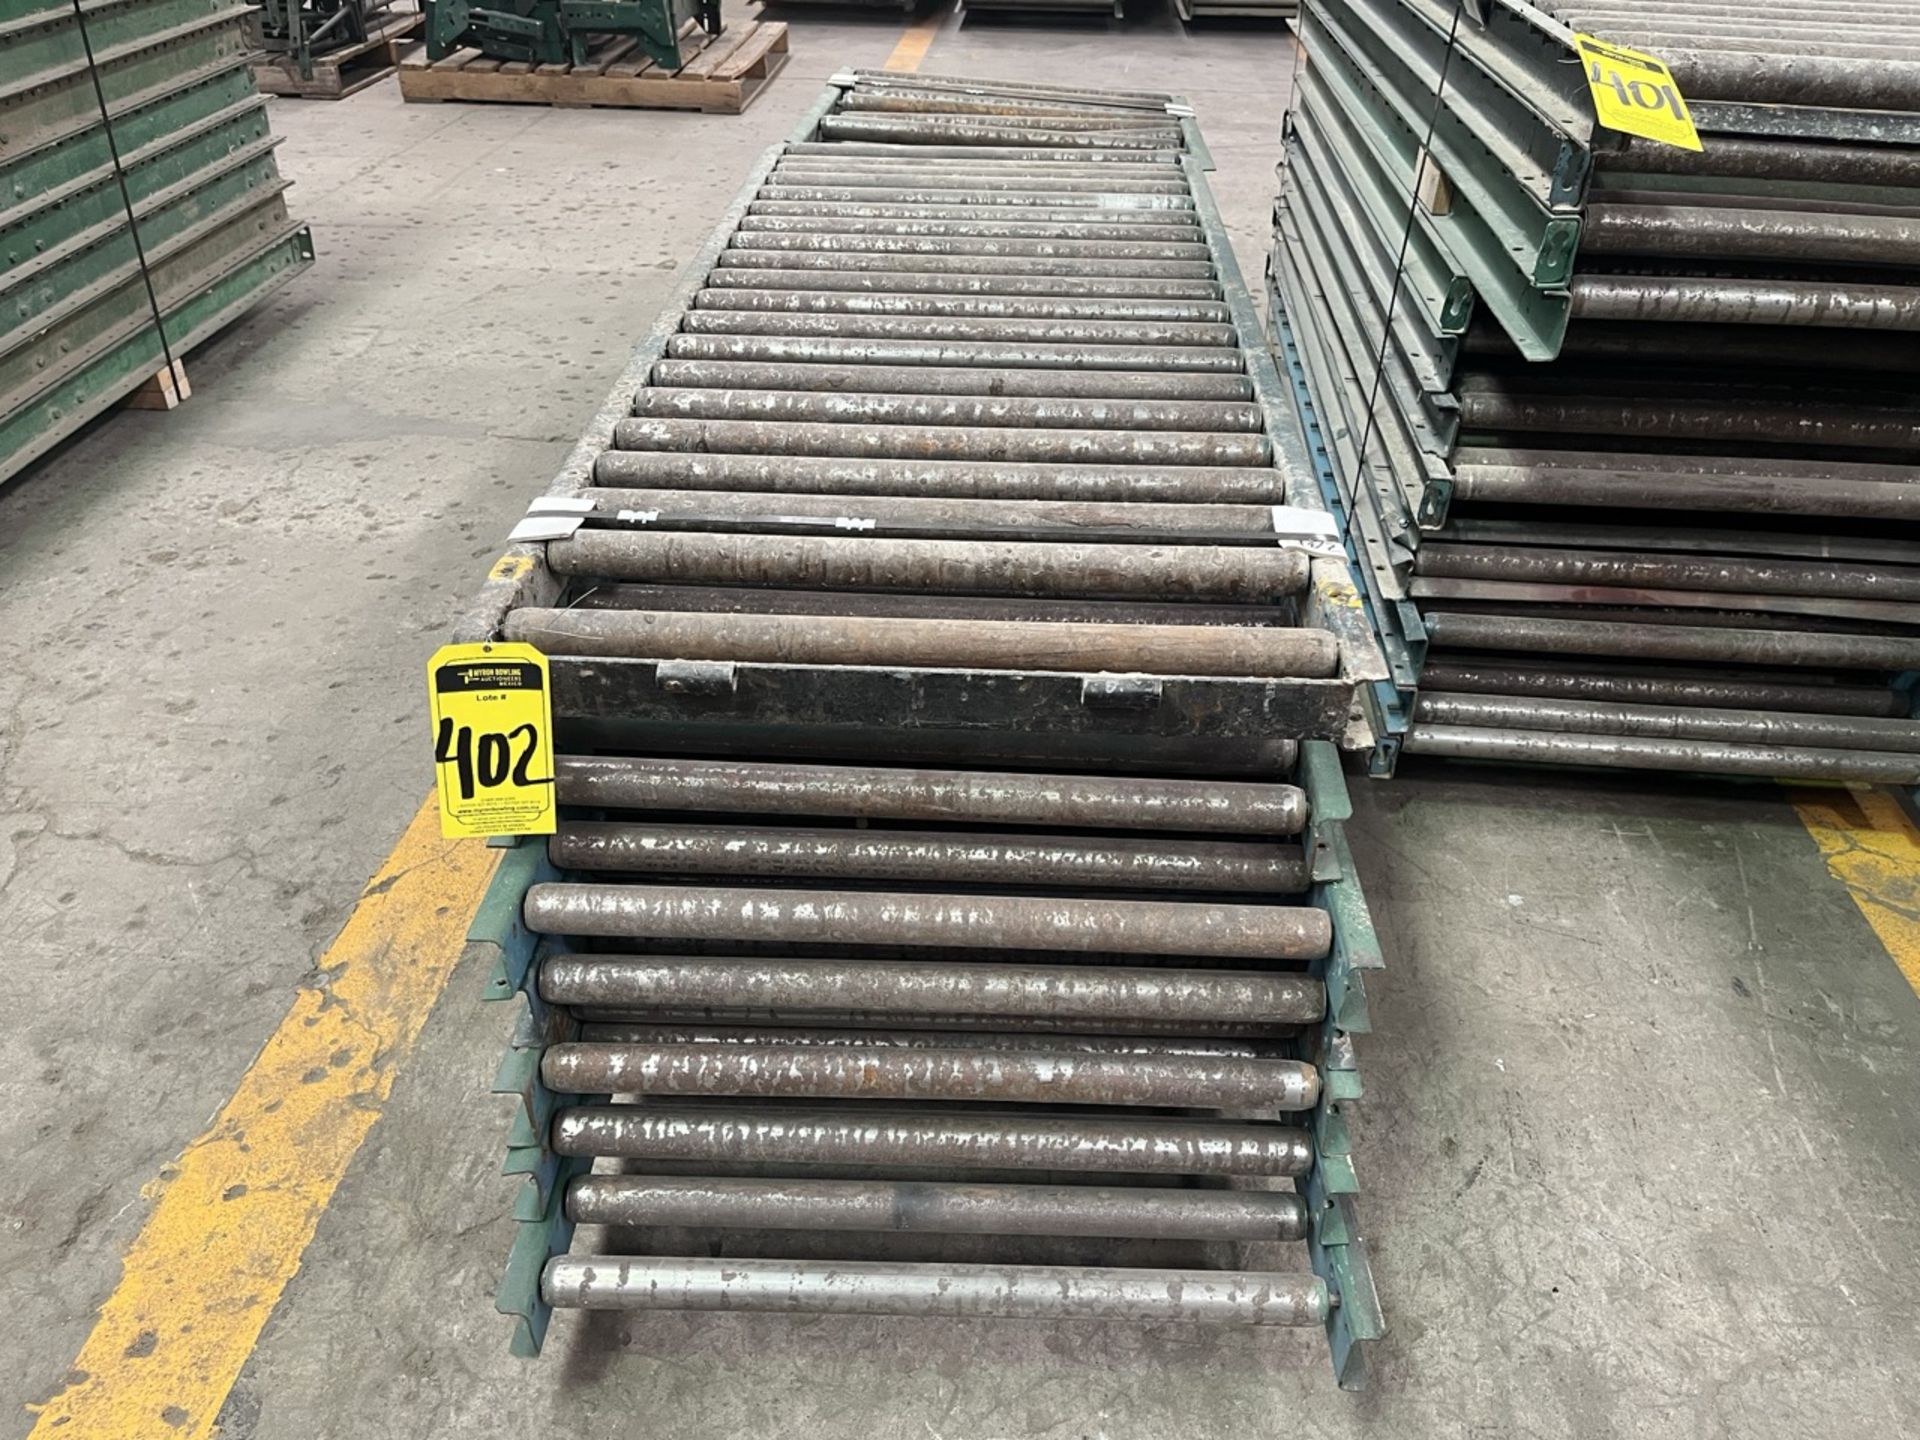 19 pieces of roller conveyor belt measuring approx. 79 cm wide by different lengths. / 19 Piezas de